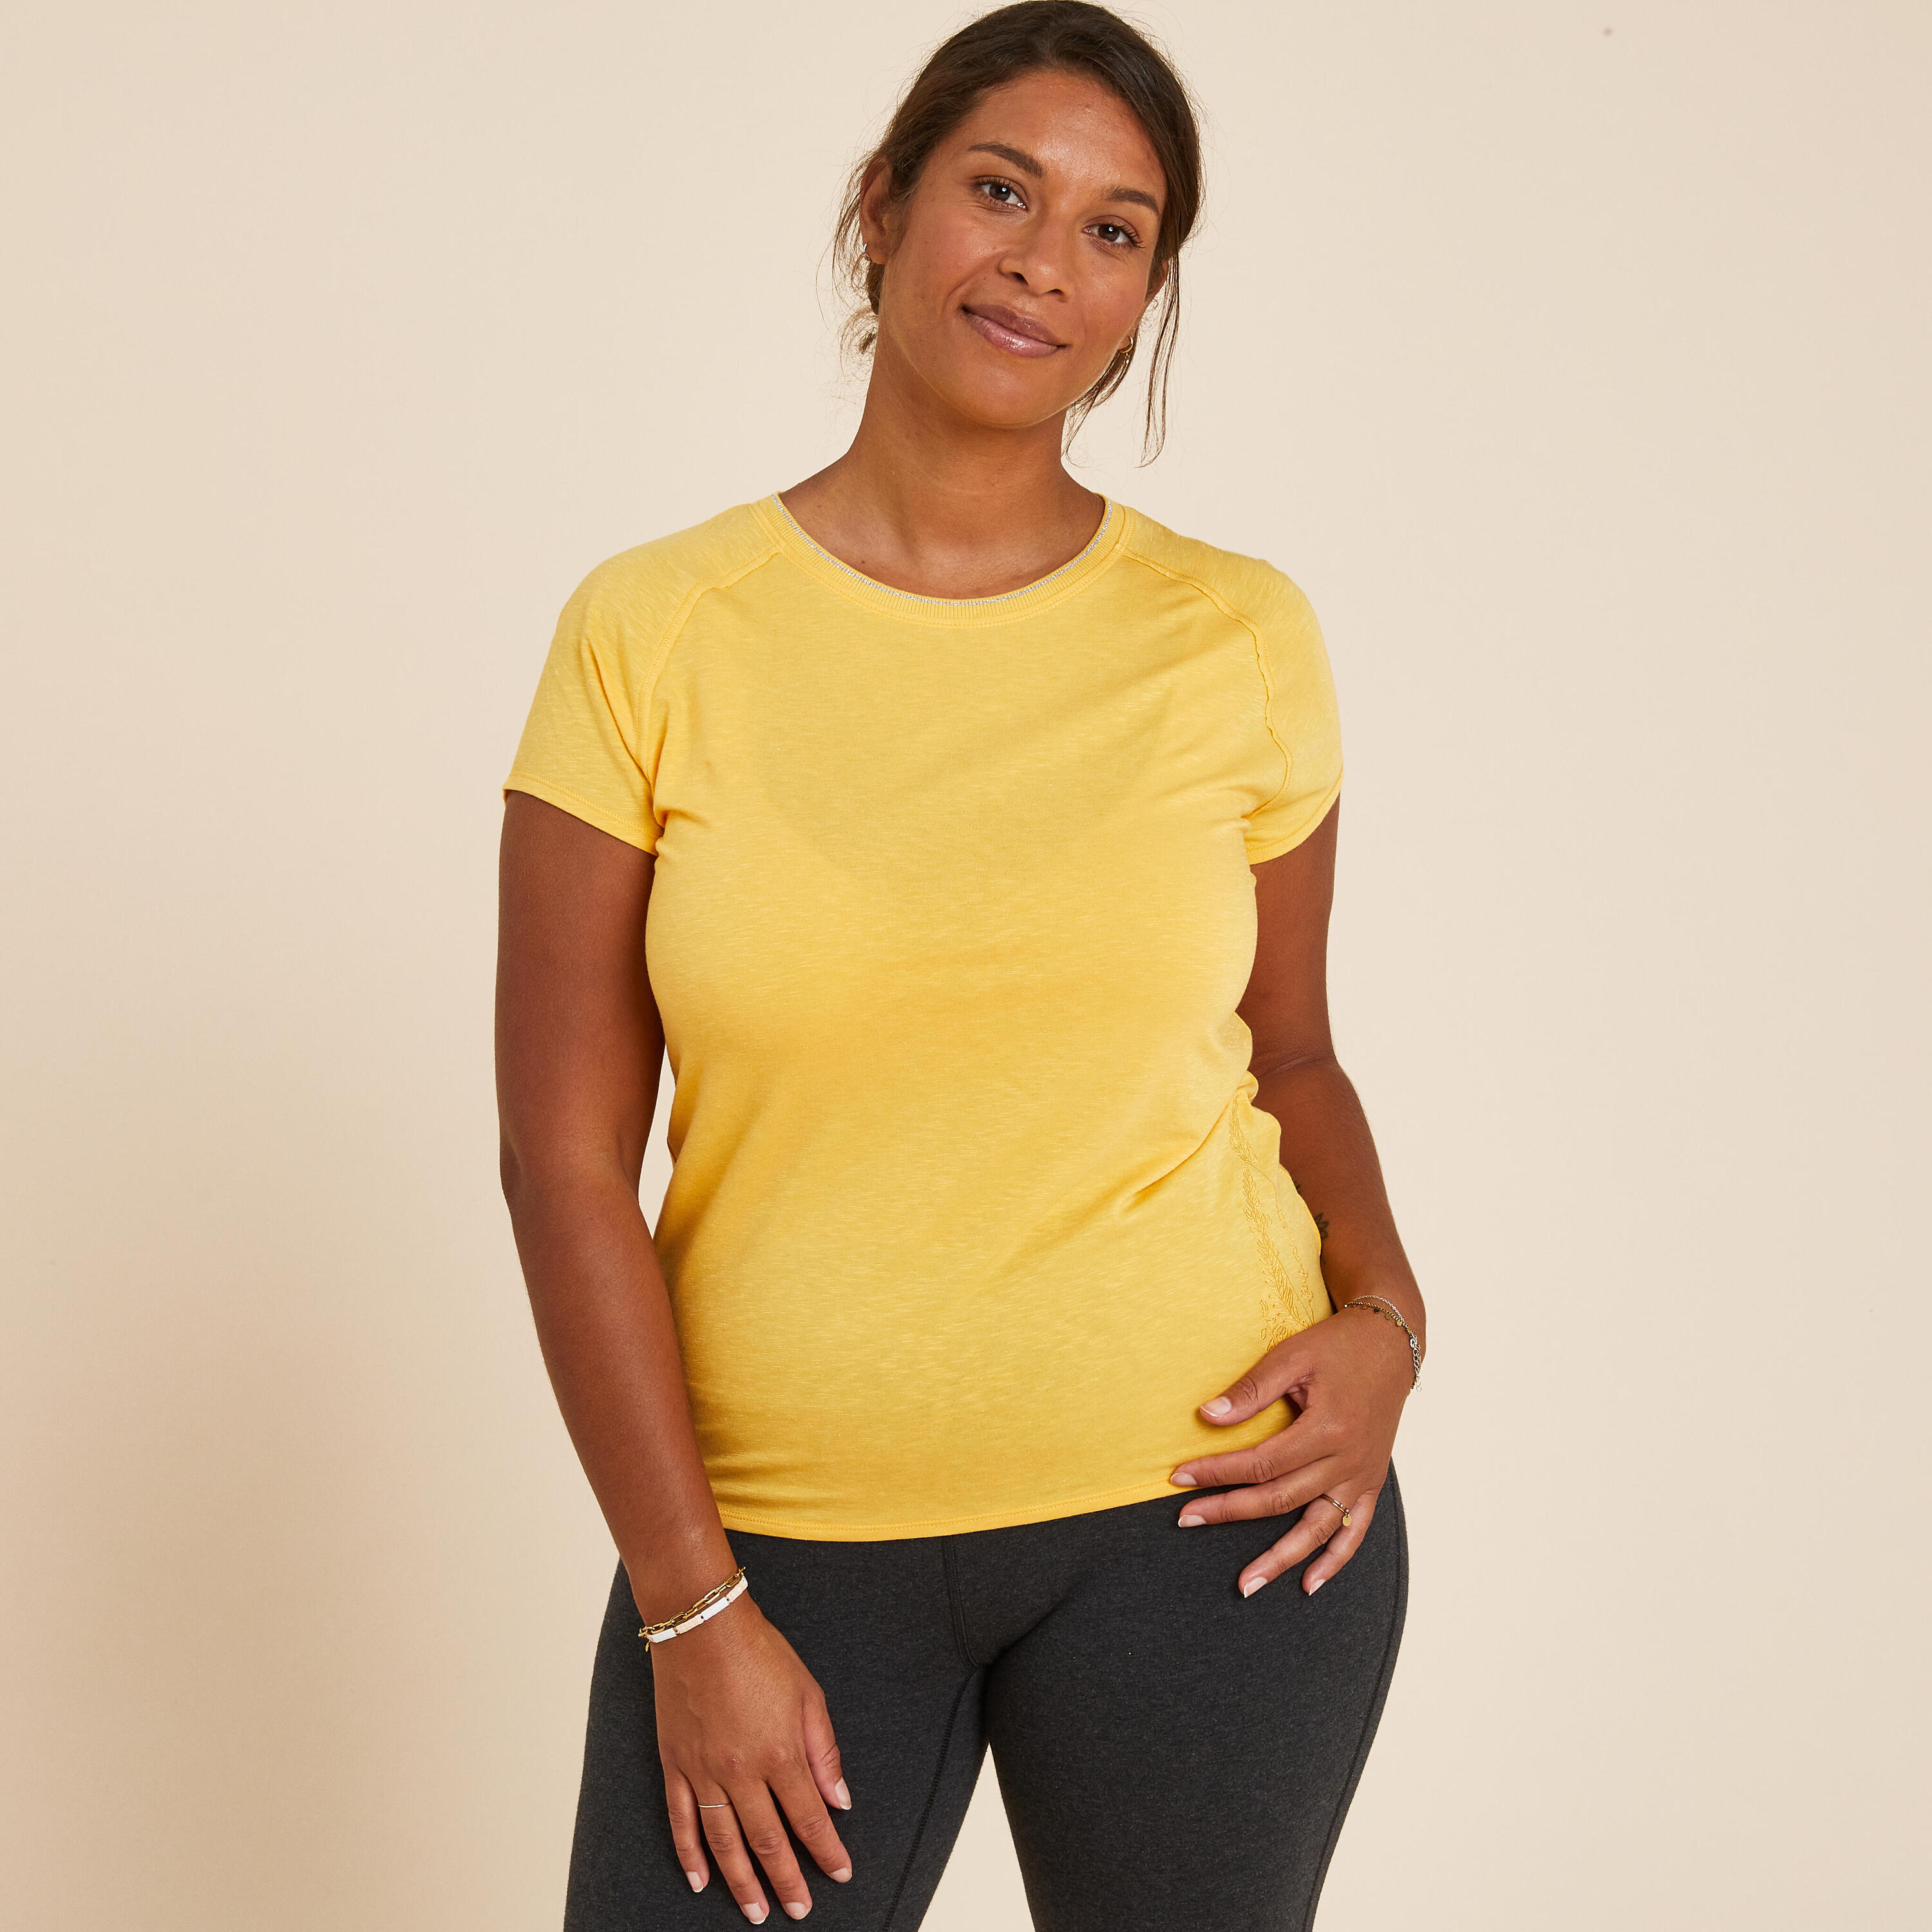 KIMJALY Women's Gentle Yoga T-Shirt - Ochre